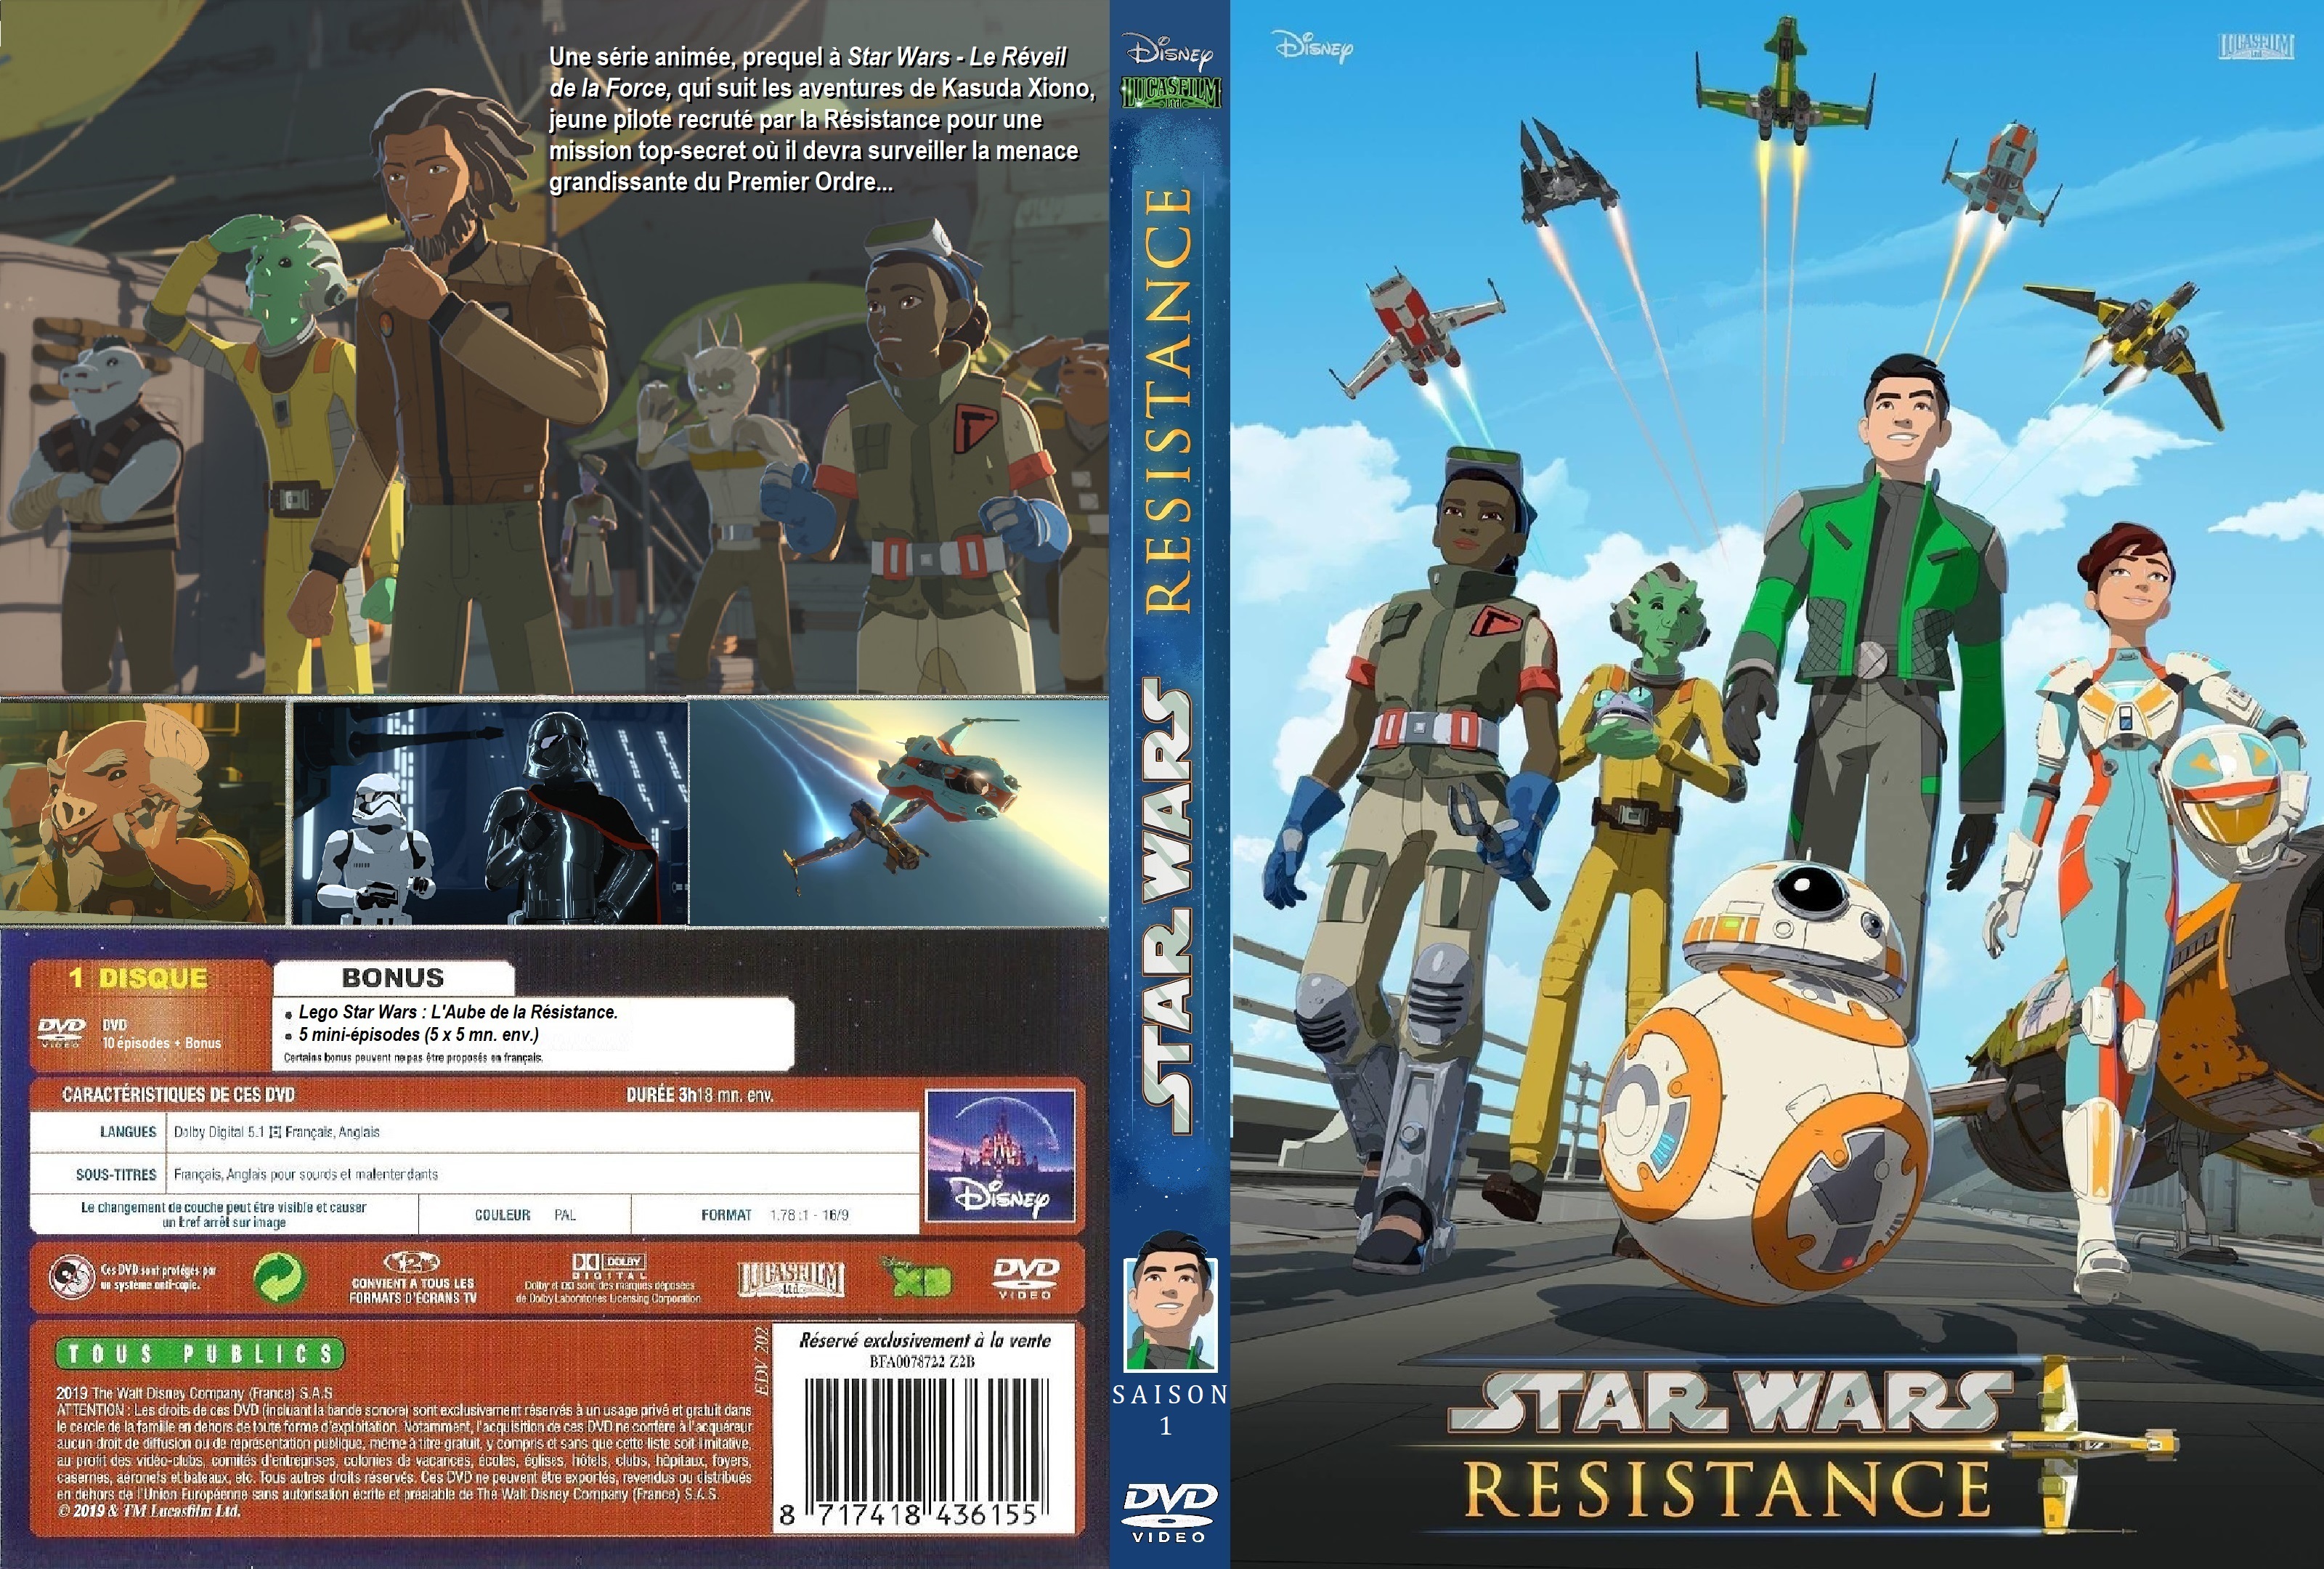 Jaquette DVD Star Wars Resistance saison 1 custom